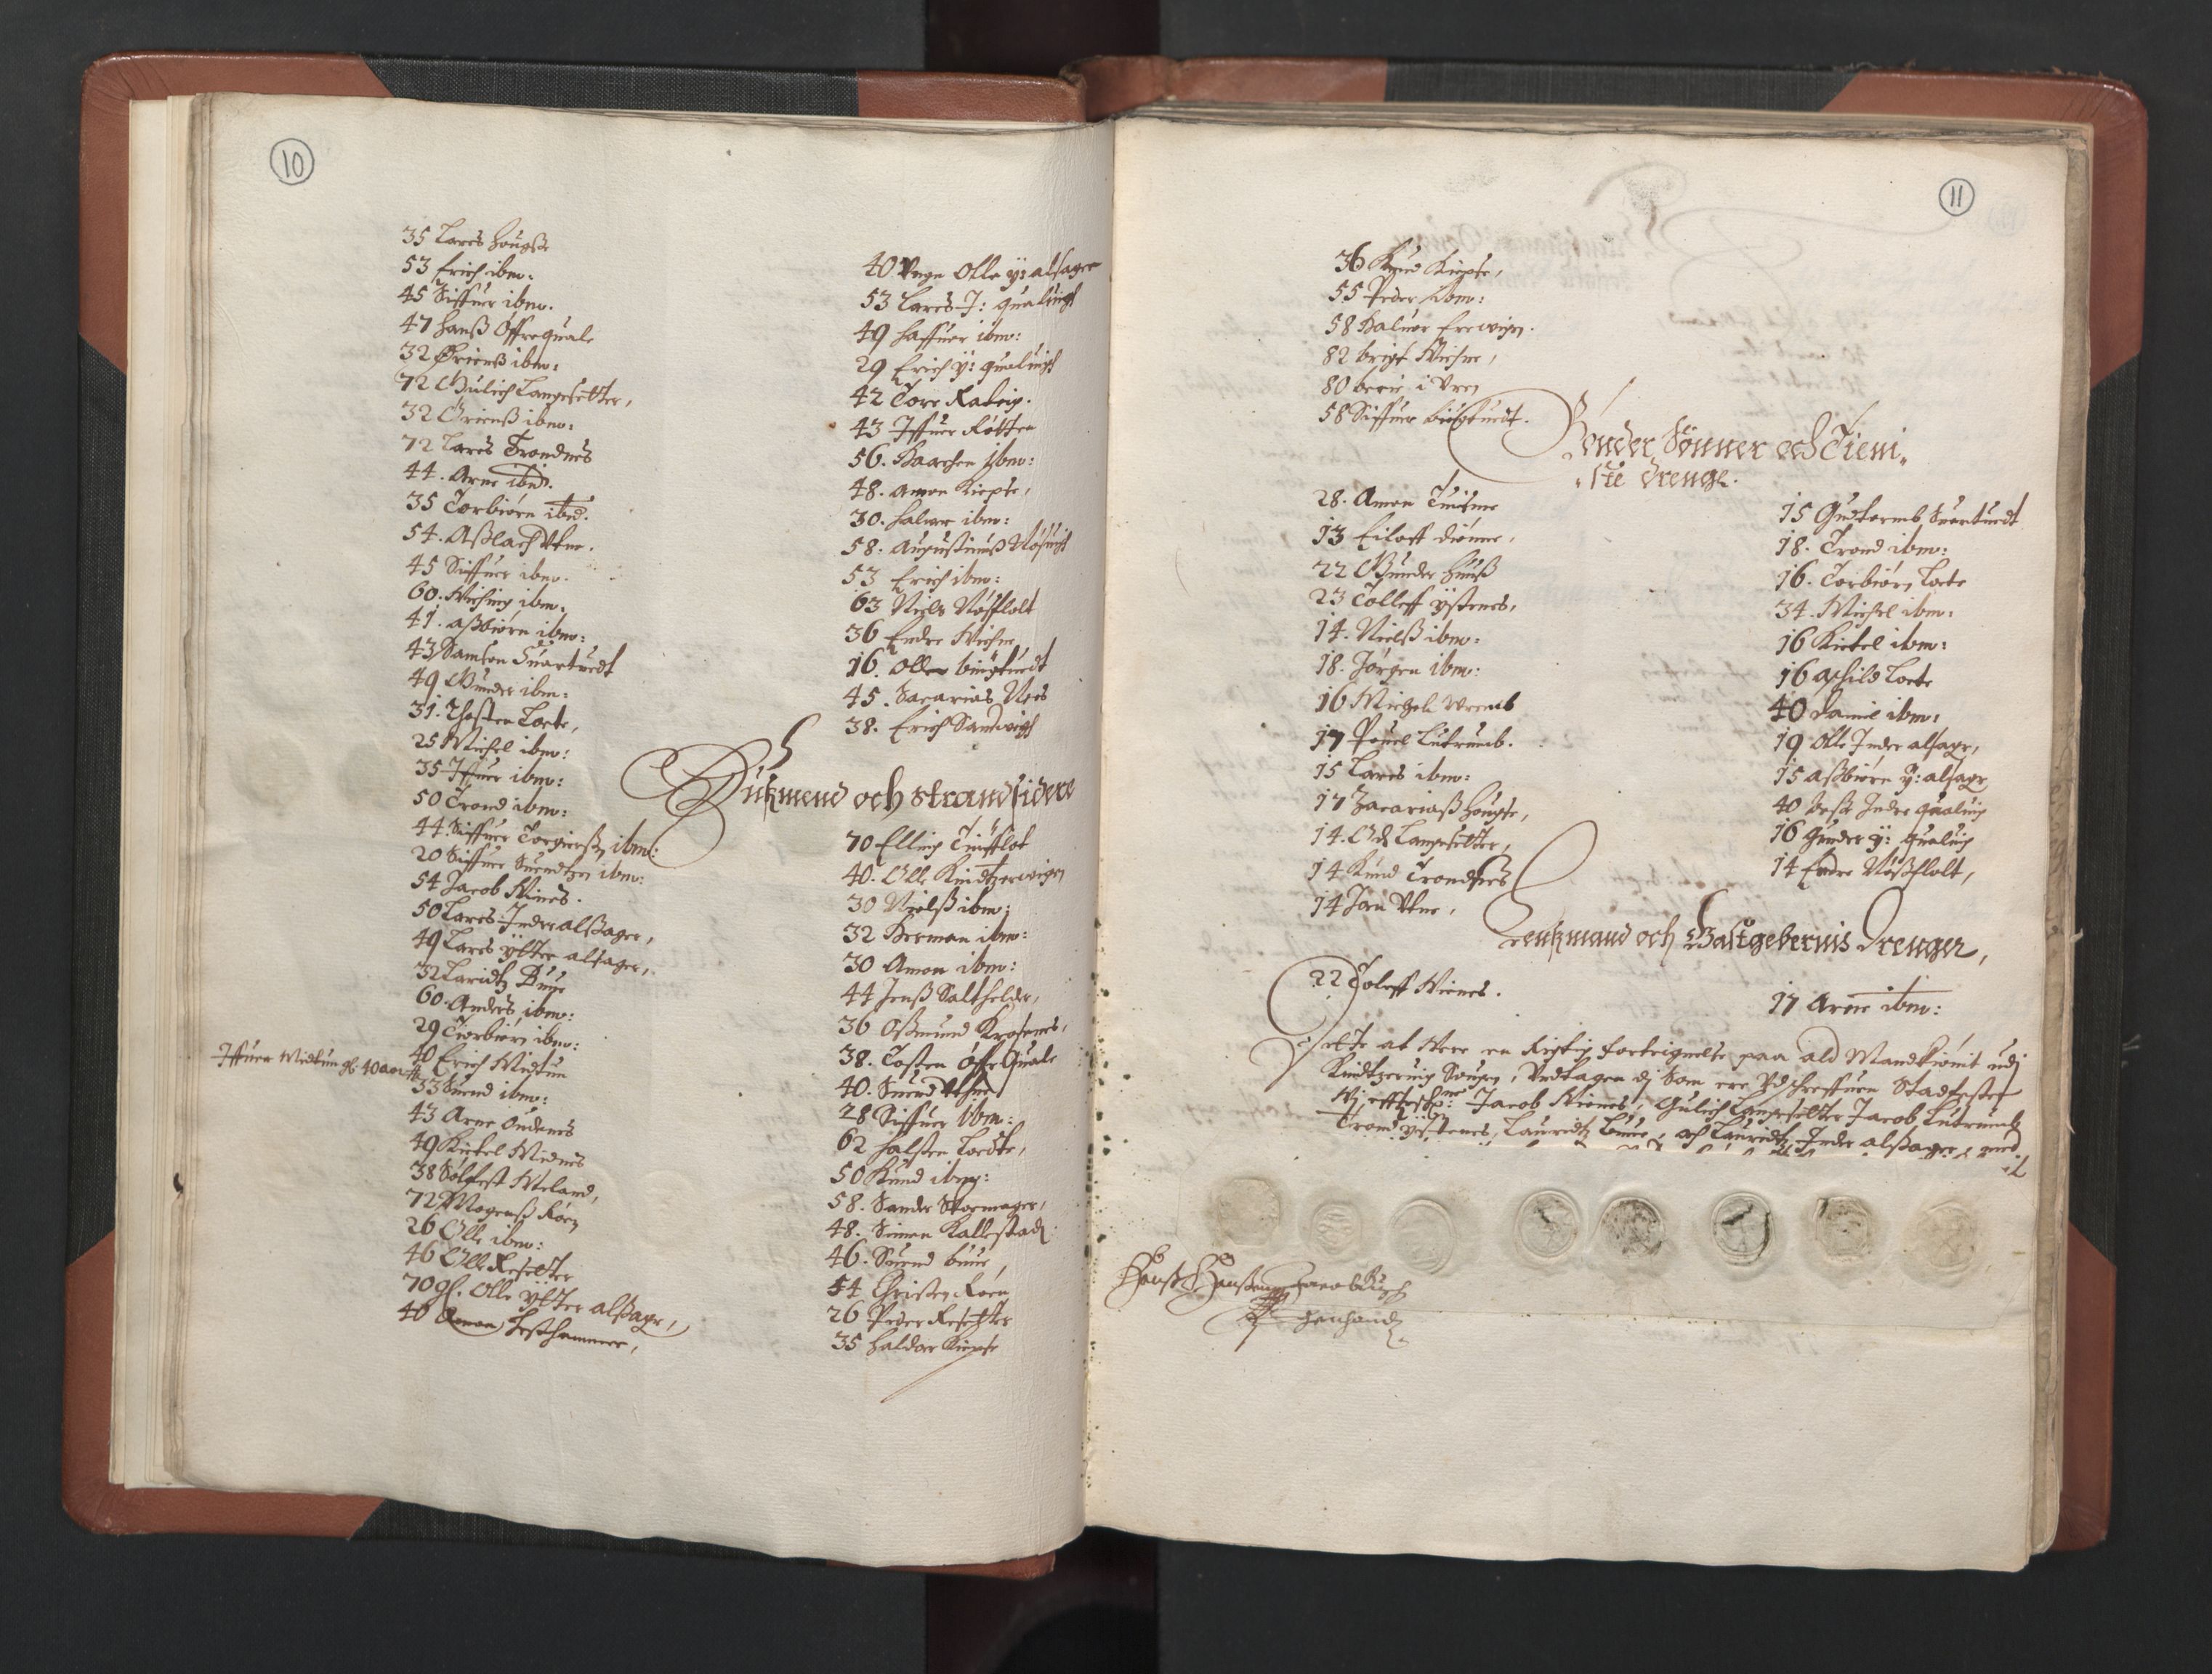 RA, Fogdenes og sorenskrivernes manntall 1664-1666, nr. 14: Hardanger len, Ytre Sogn fogderi og Indre Sogn fogderi, 1664-1665, s. 10-11